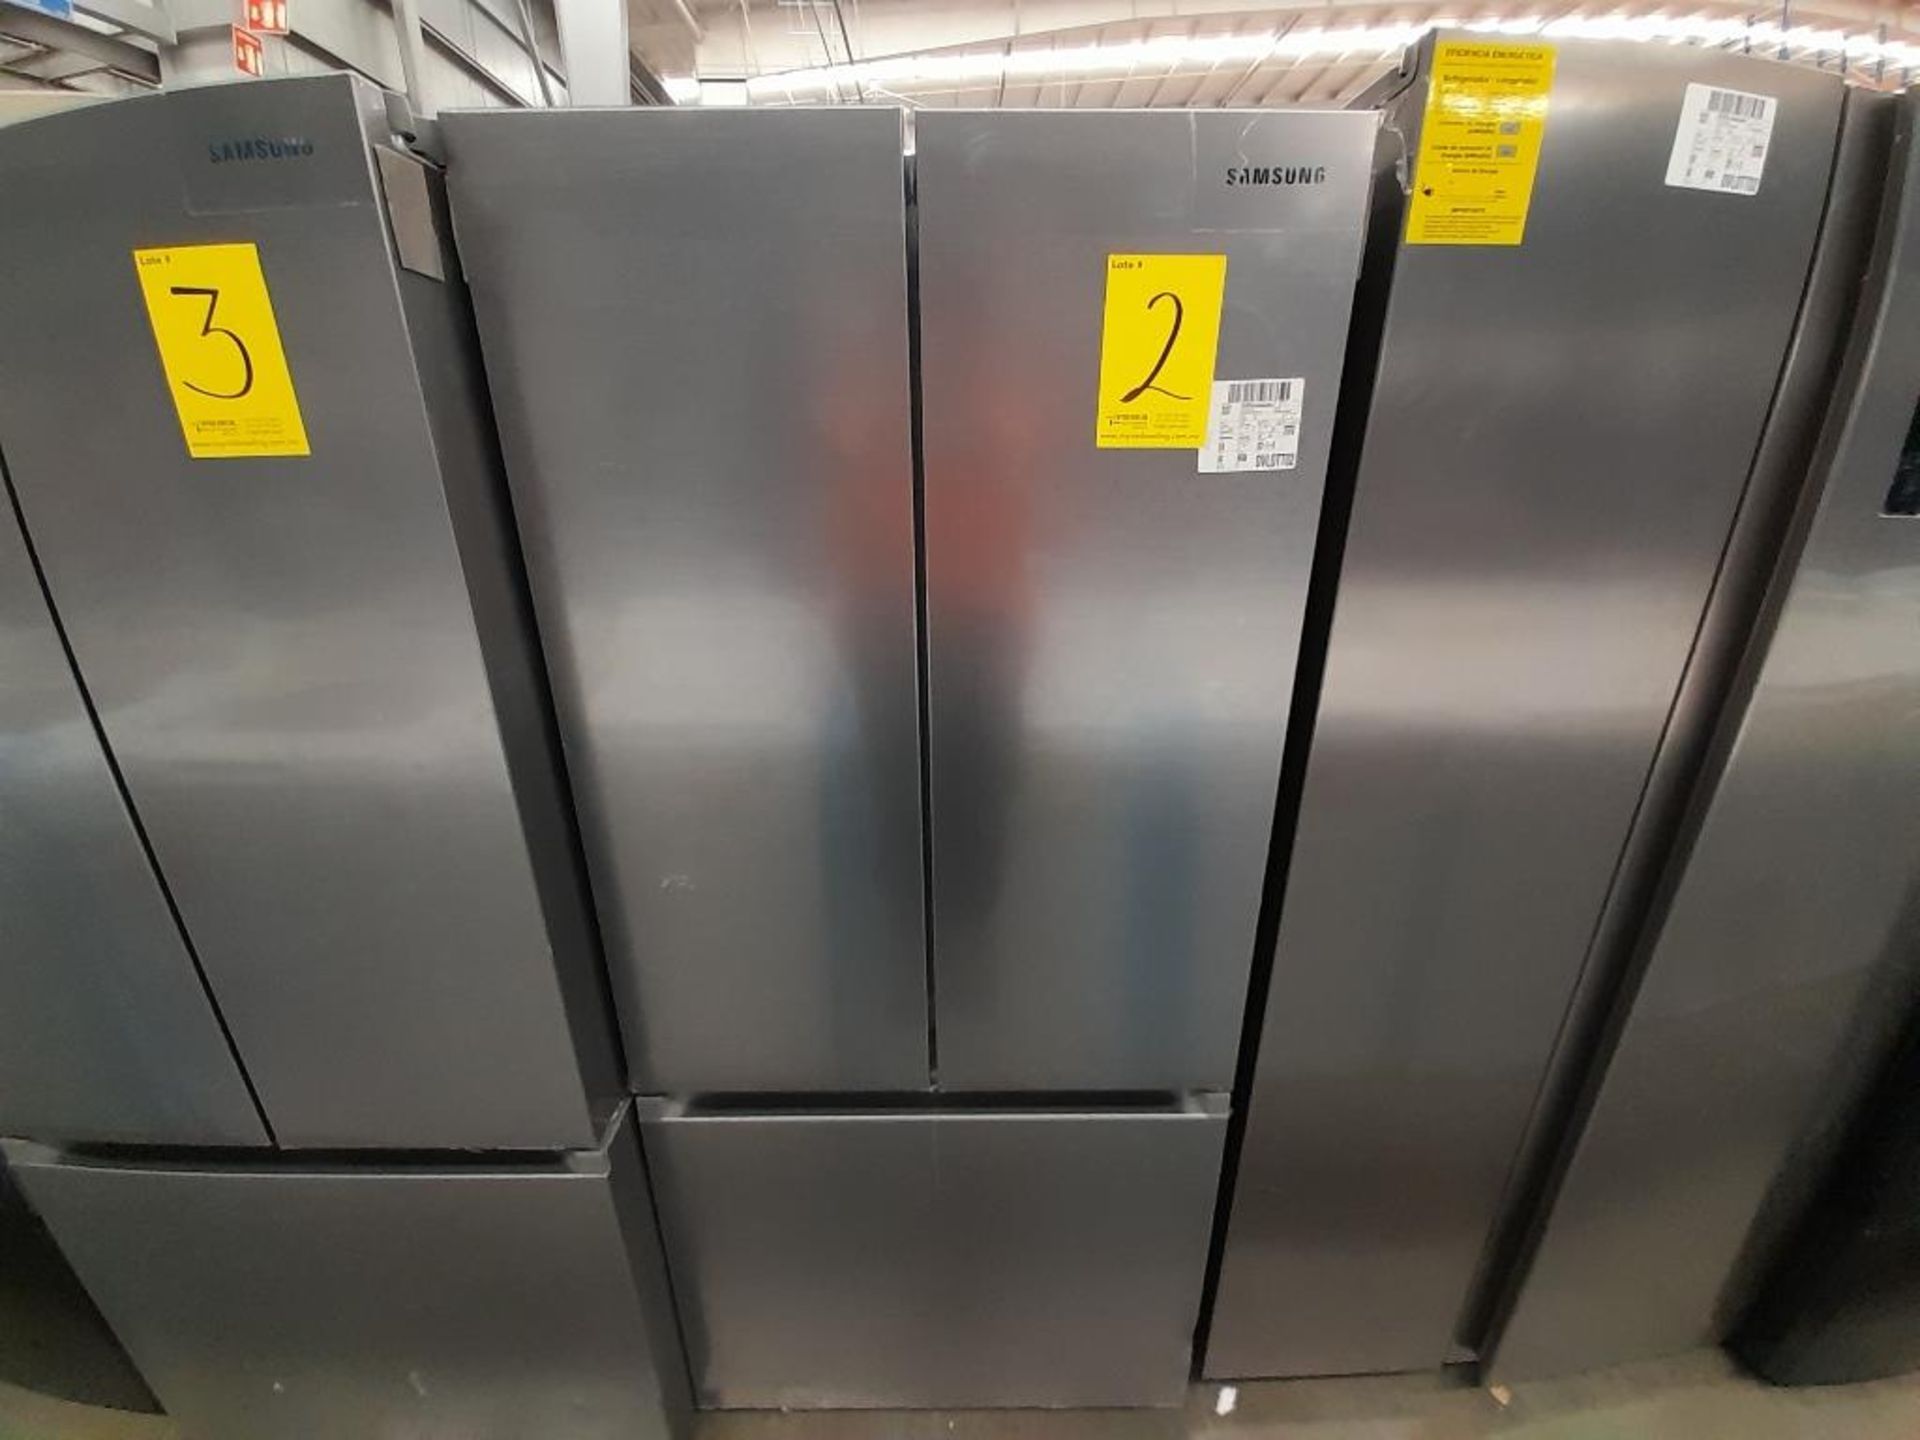 Lote de 1 Refrigerador Marca SAMSUNG, Modelo RF22A401059, Serie 100923F, Color GRIS;(Detalles estét